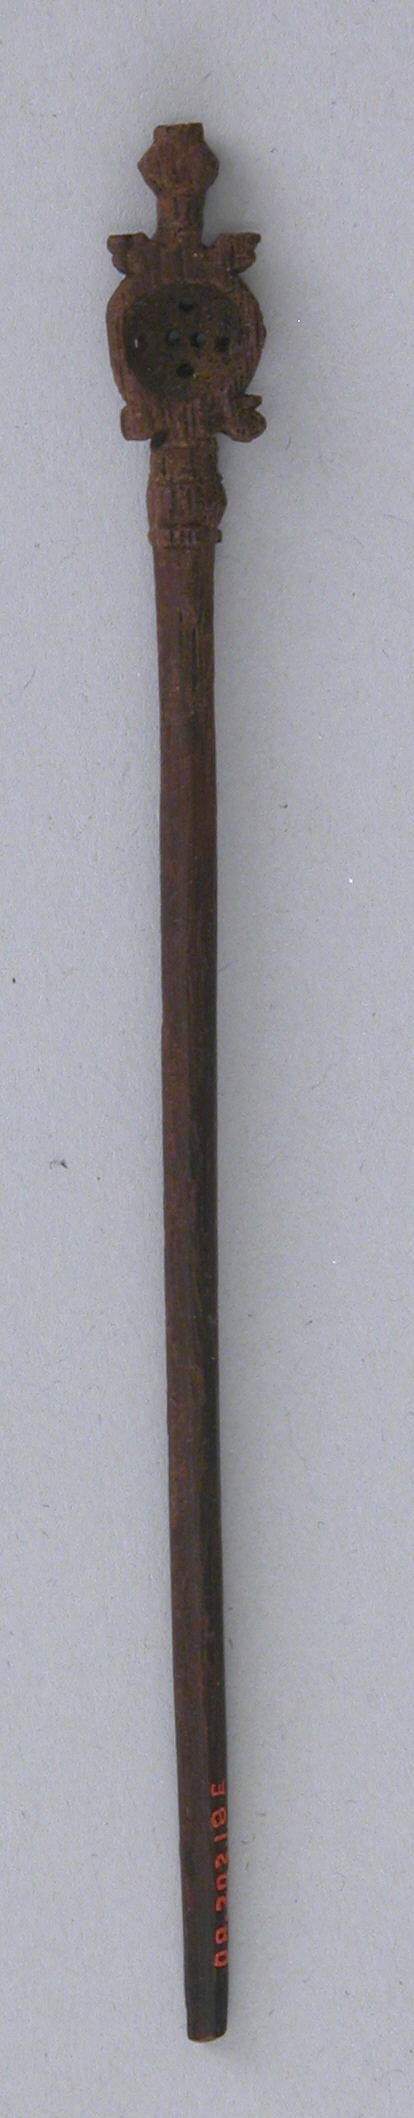 Kohl Stick | The Metropolitan Museum of Art